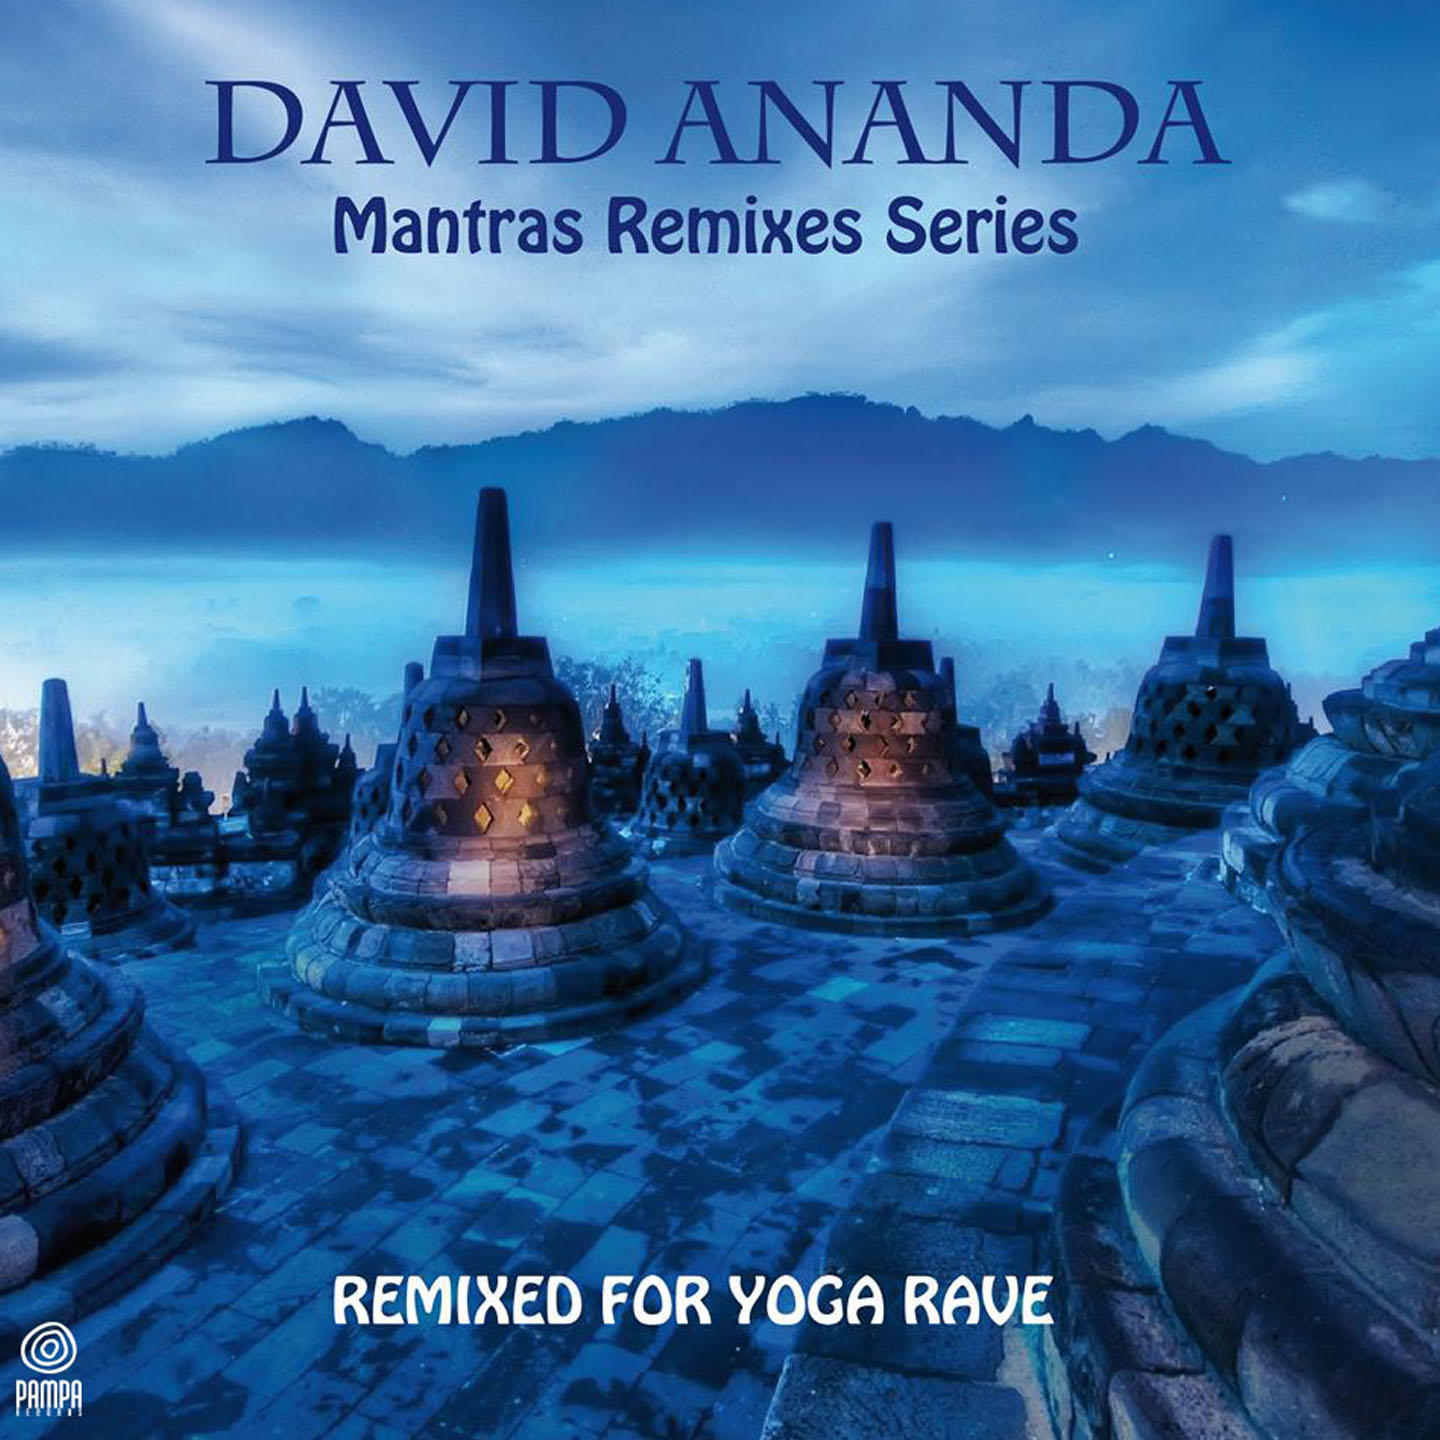 Mantras Remixes Series (Remixed Yoga Rave)